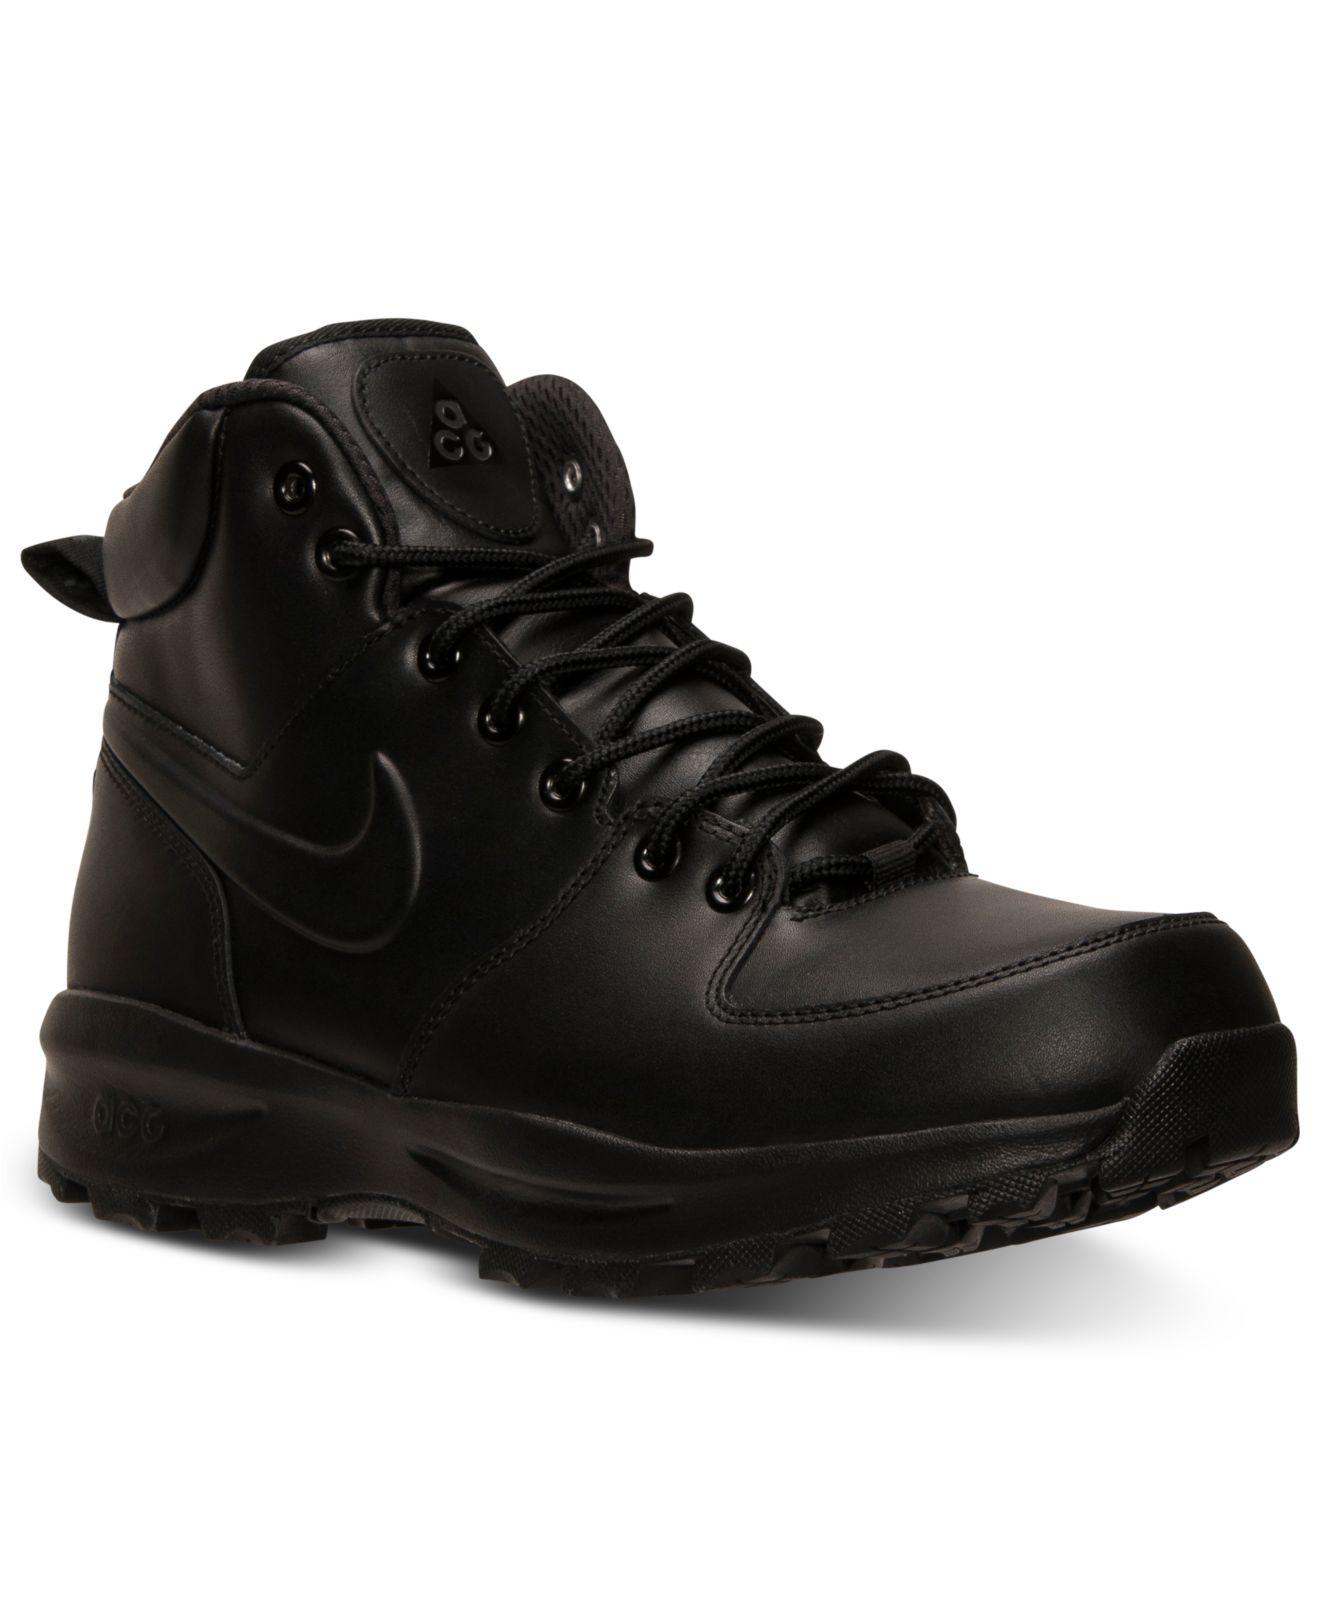 Nike Leather Manoa in Black/Black/Black (Black) for Men - Save 45% | Lyst